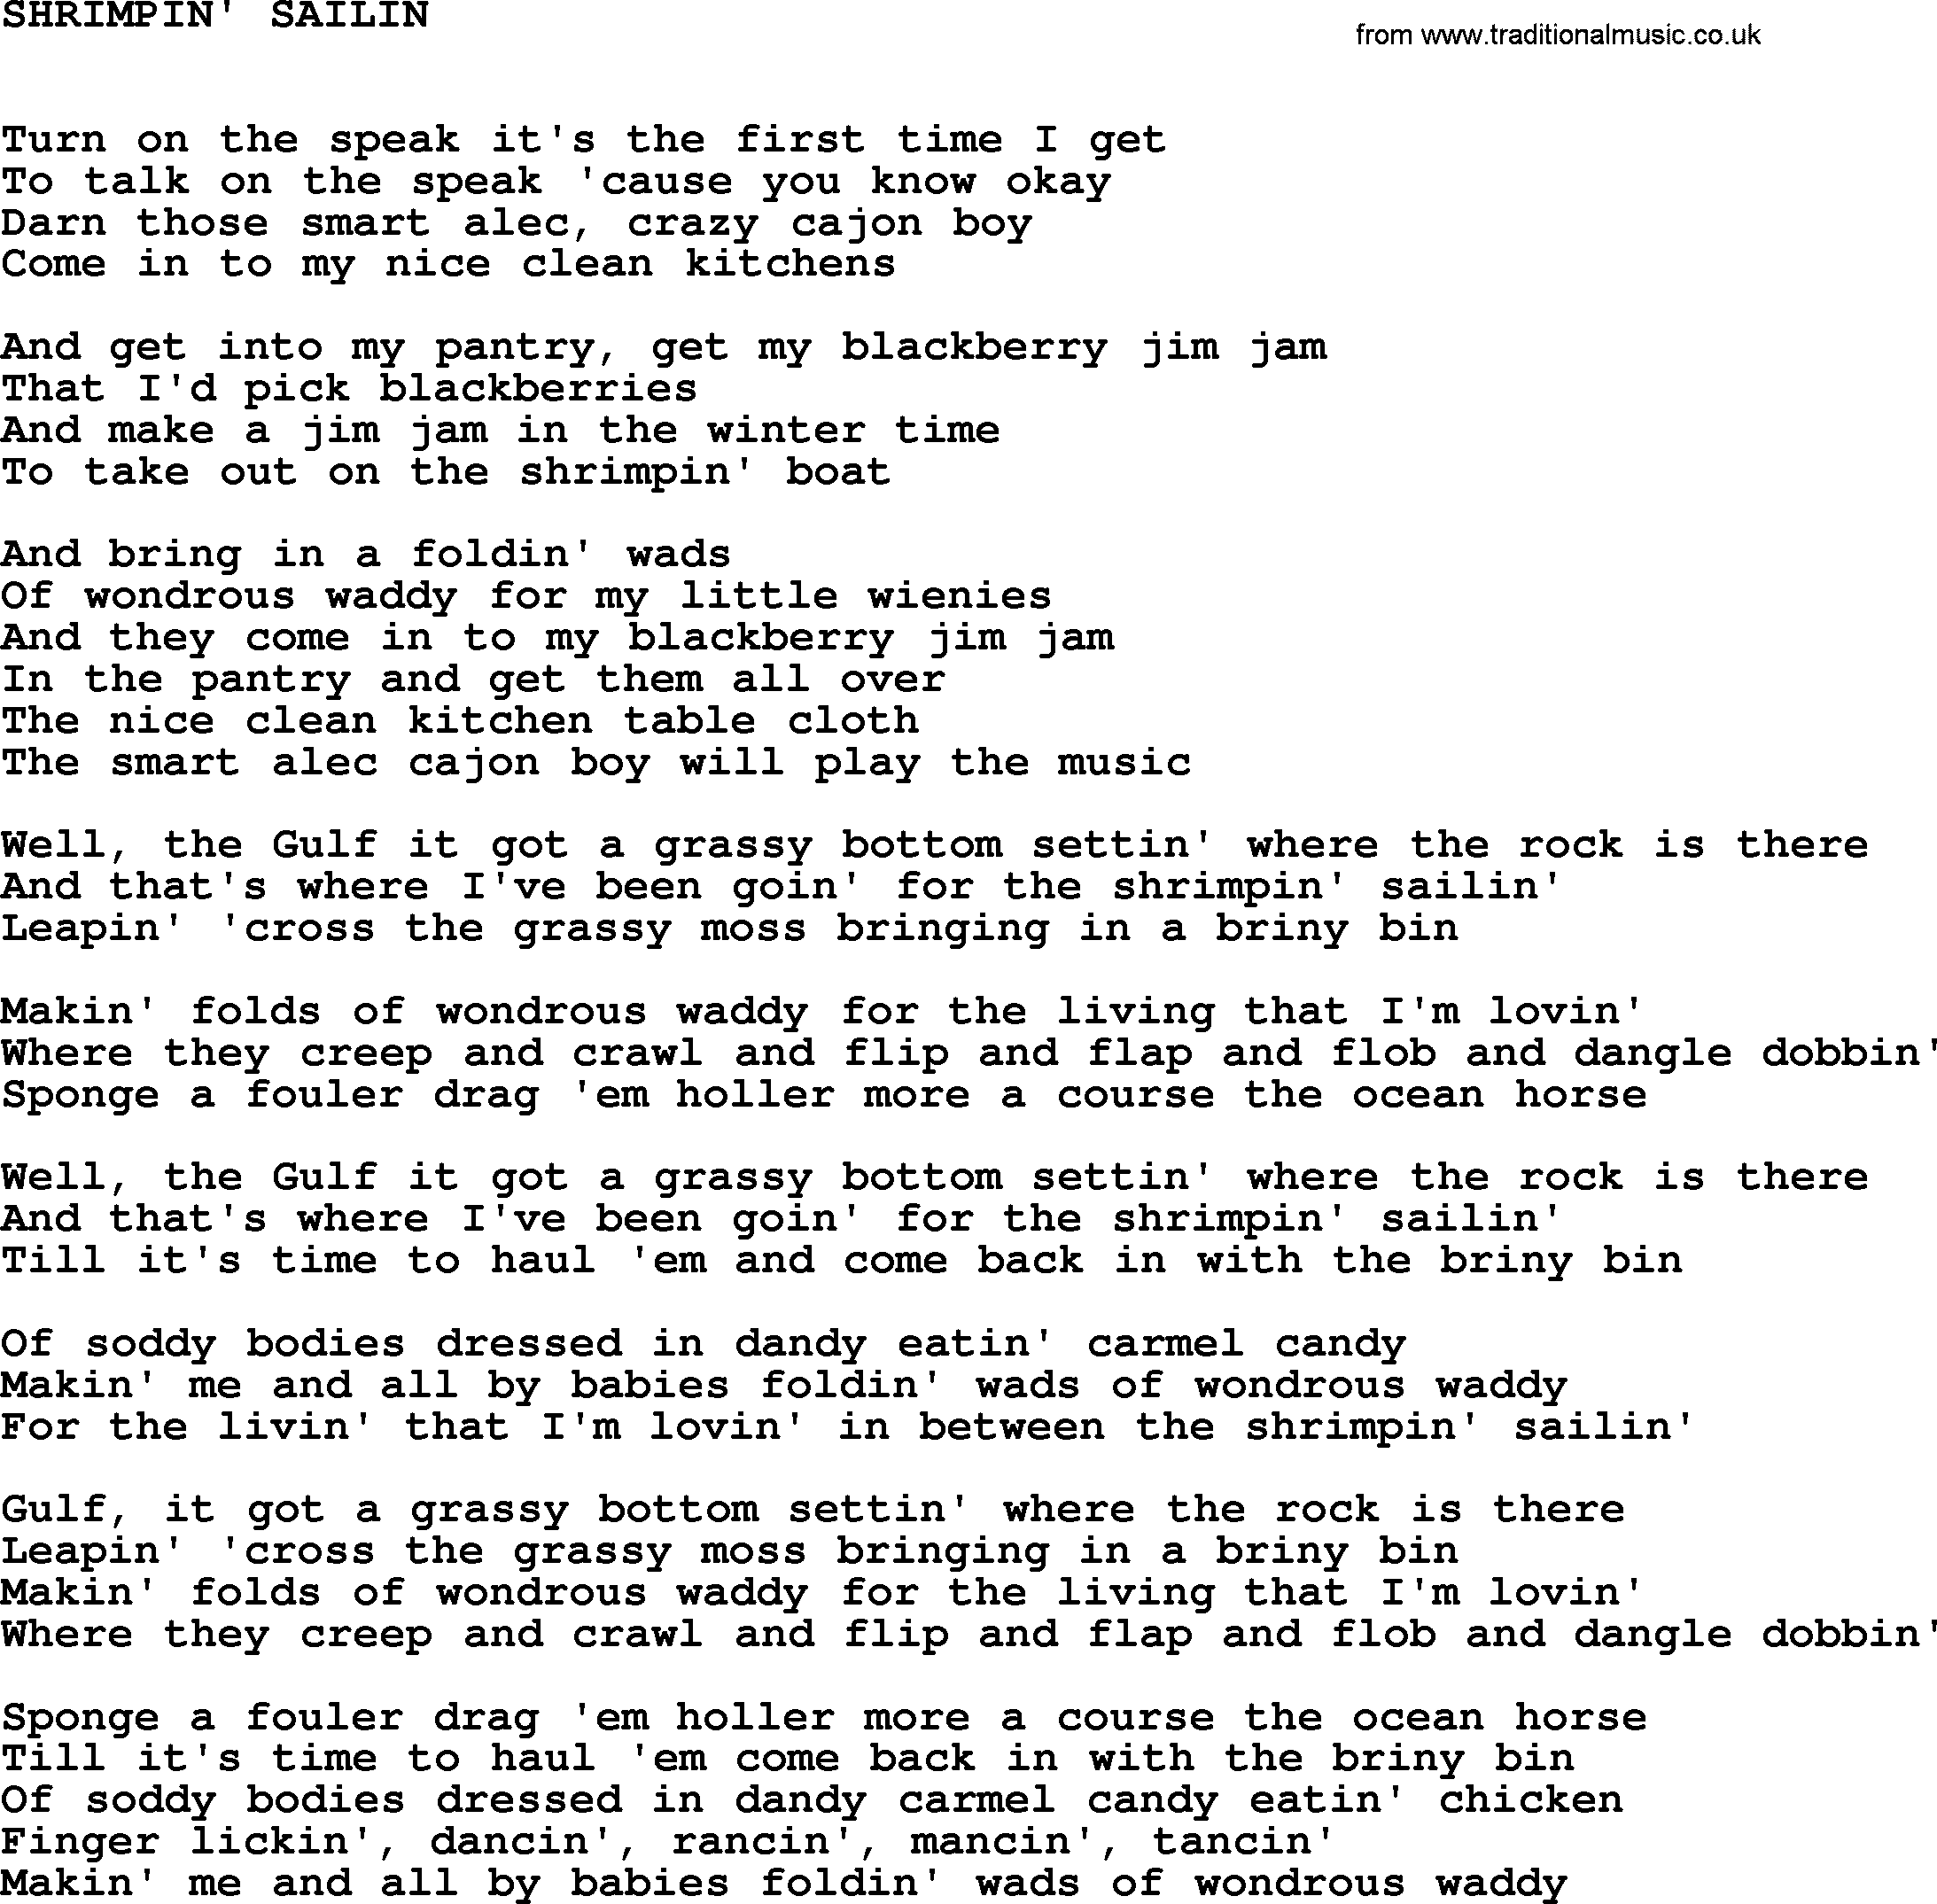 Johnny Cash song Shrimpin' Sailin.txt lyrics